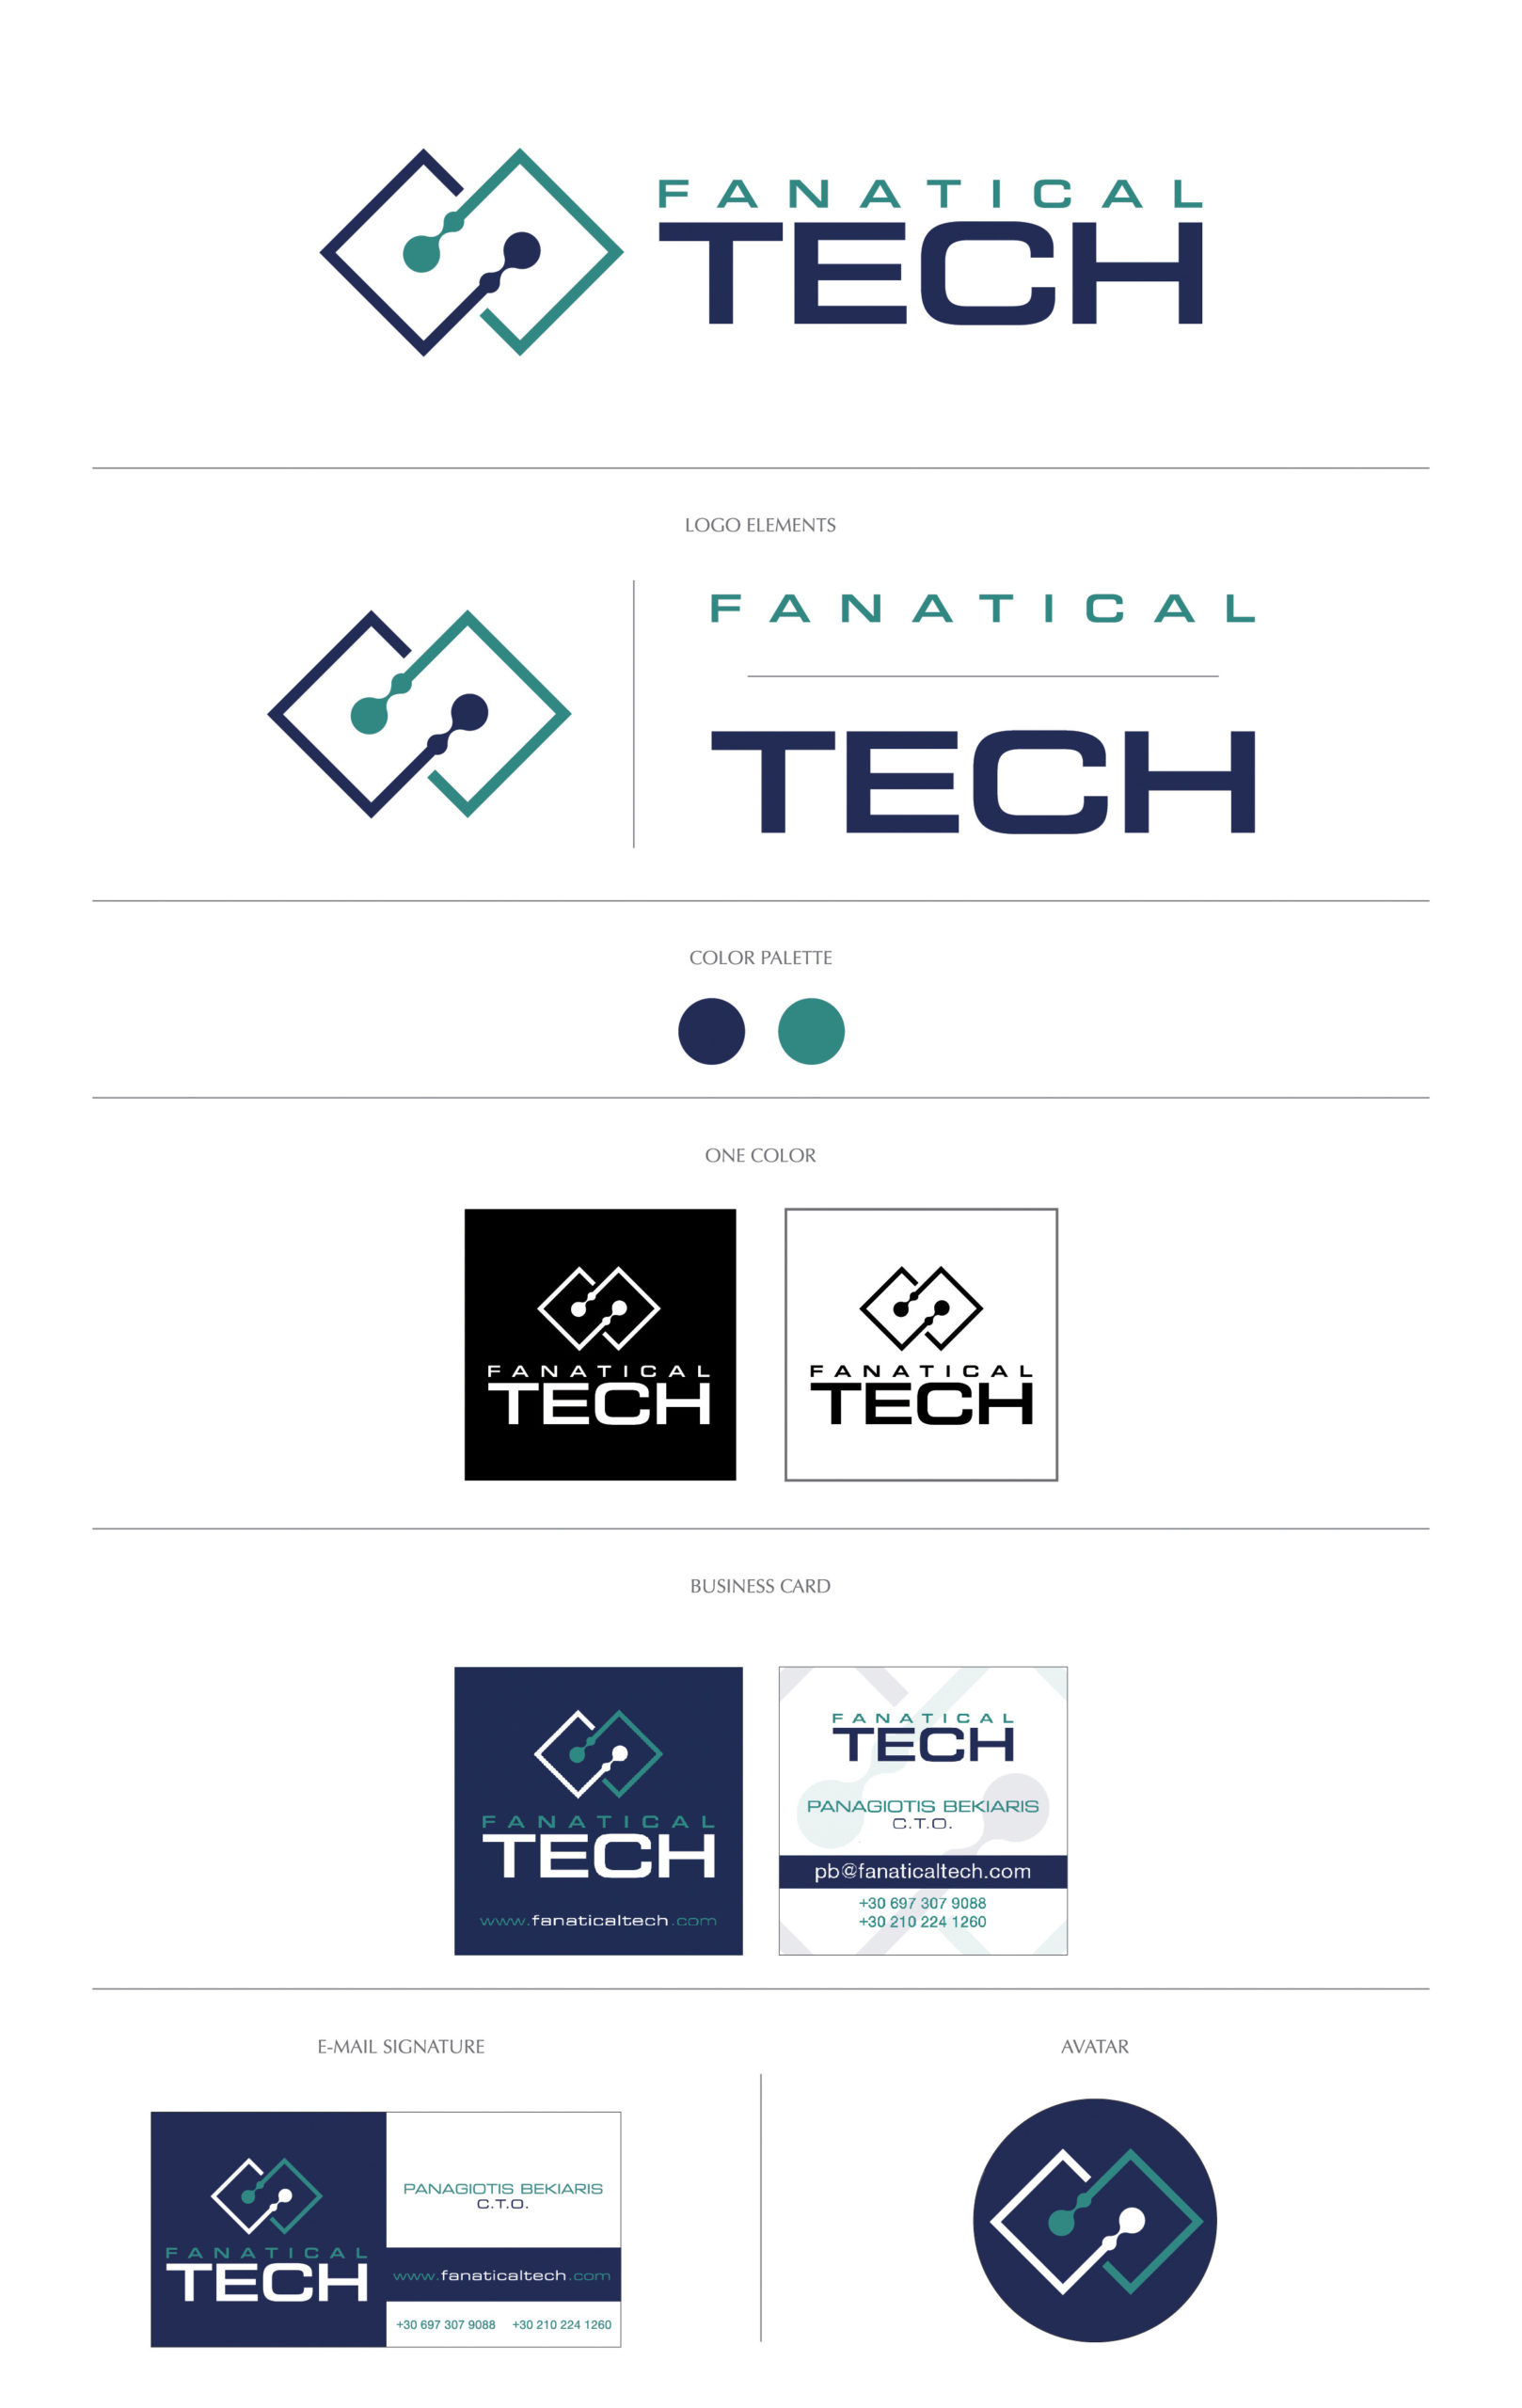 Fanatical tech branding